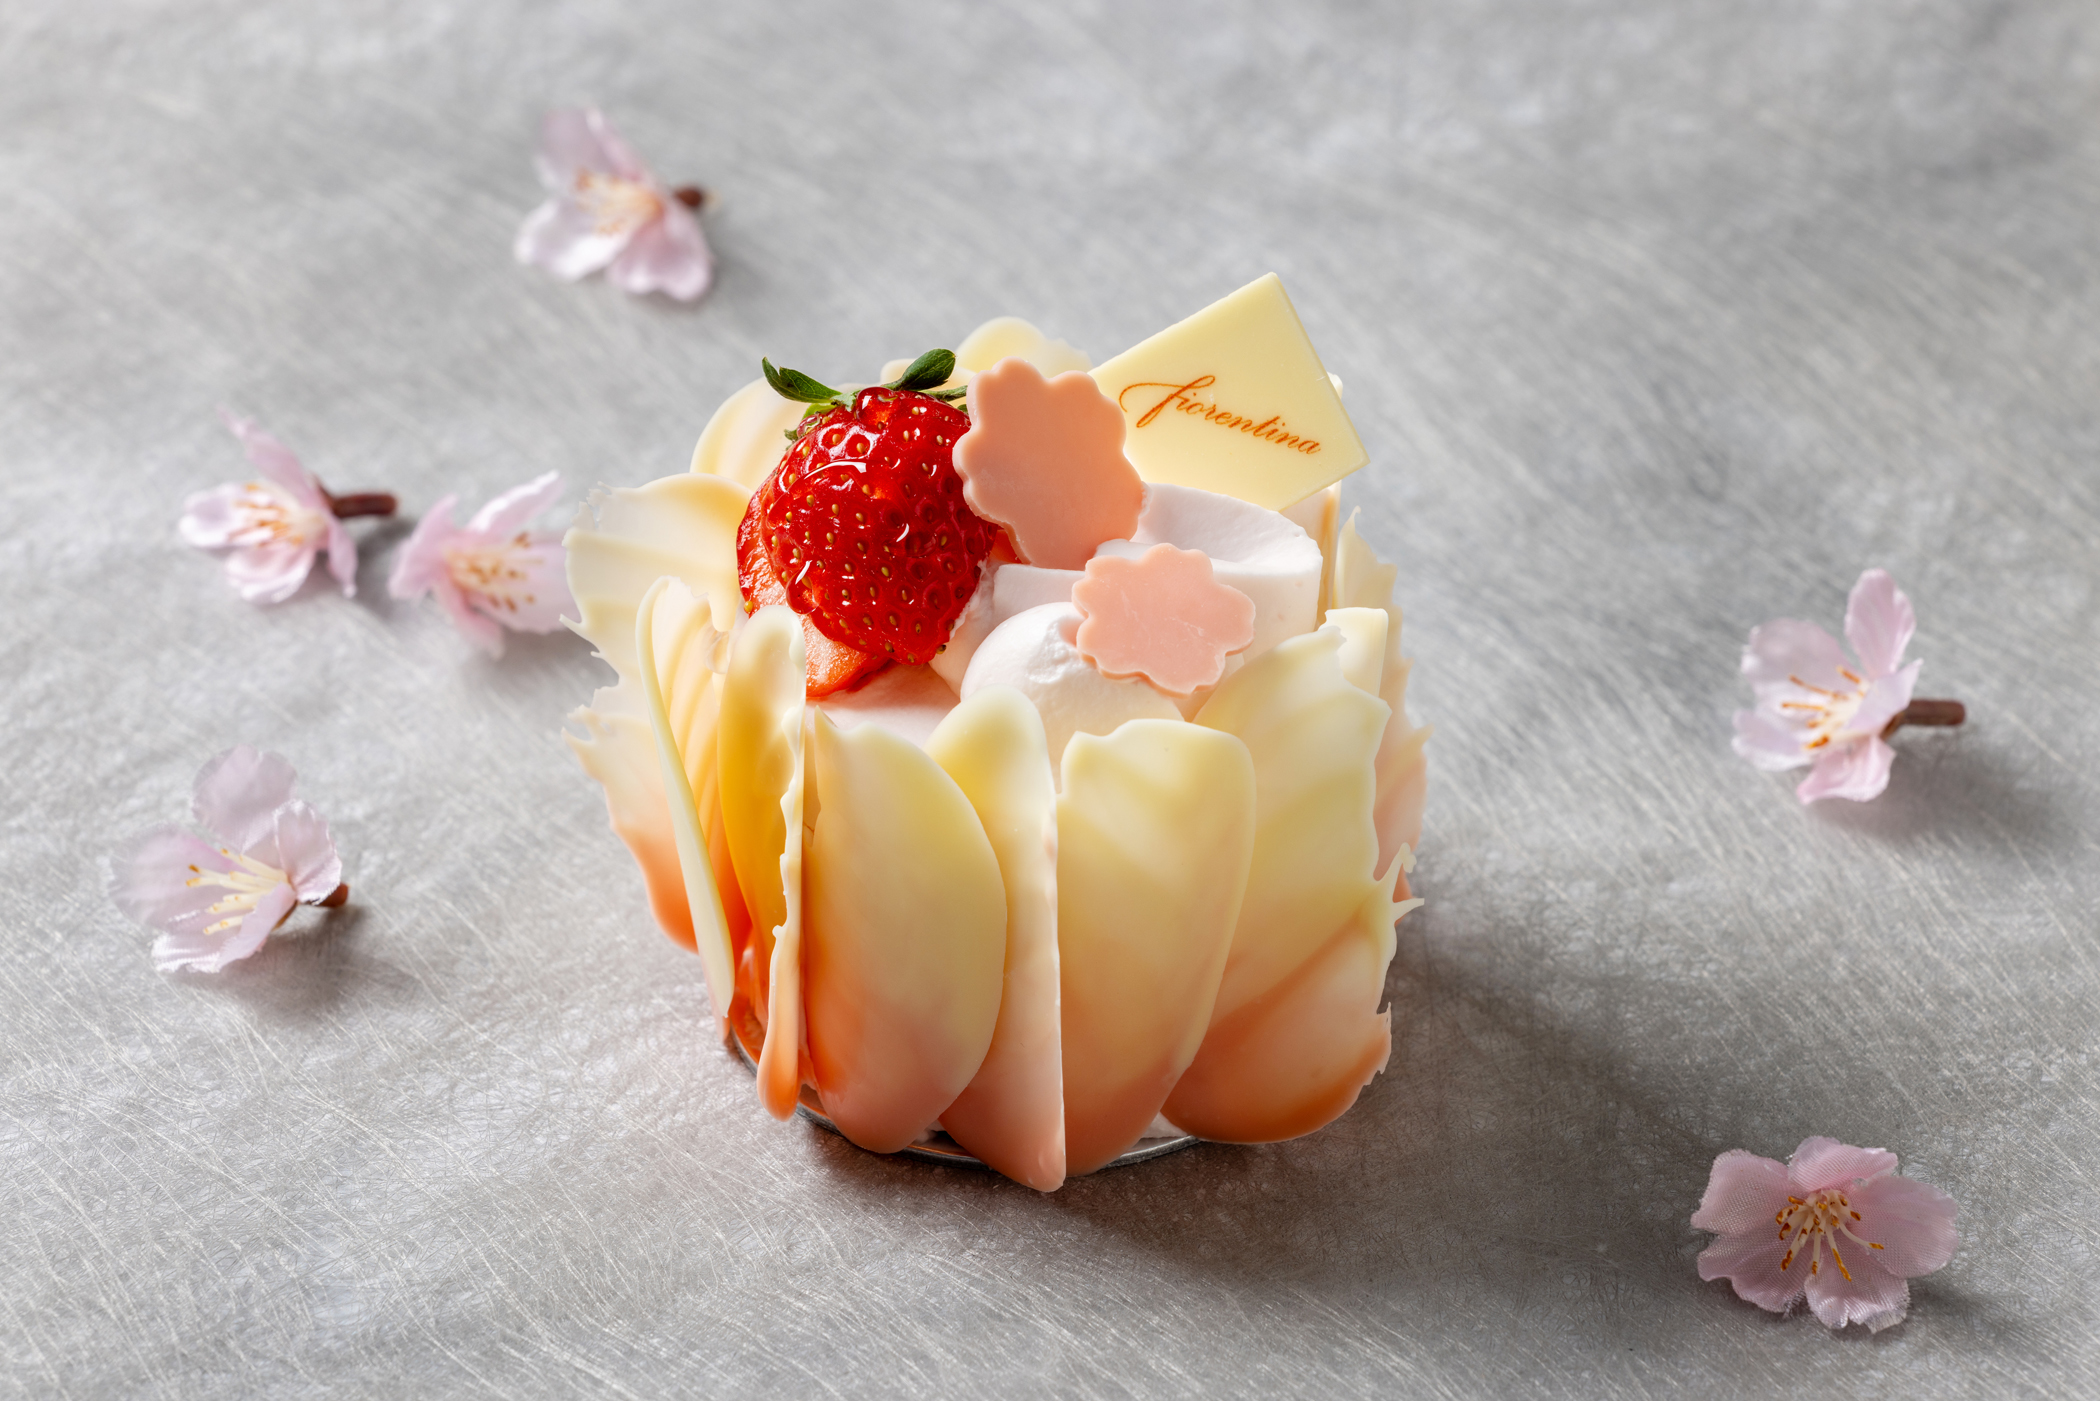 Sakura Sweets Selection at Grand Hyatt Tokyo